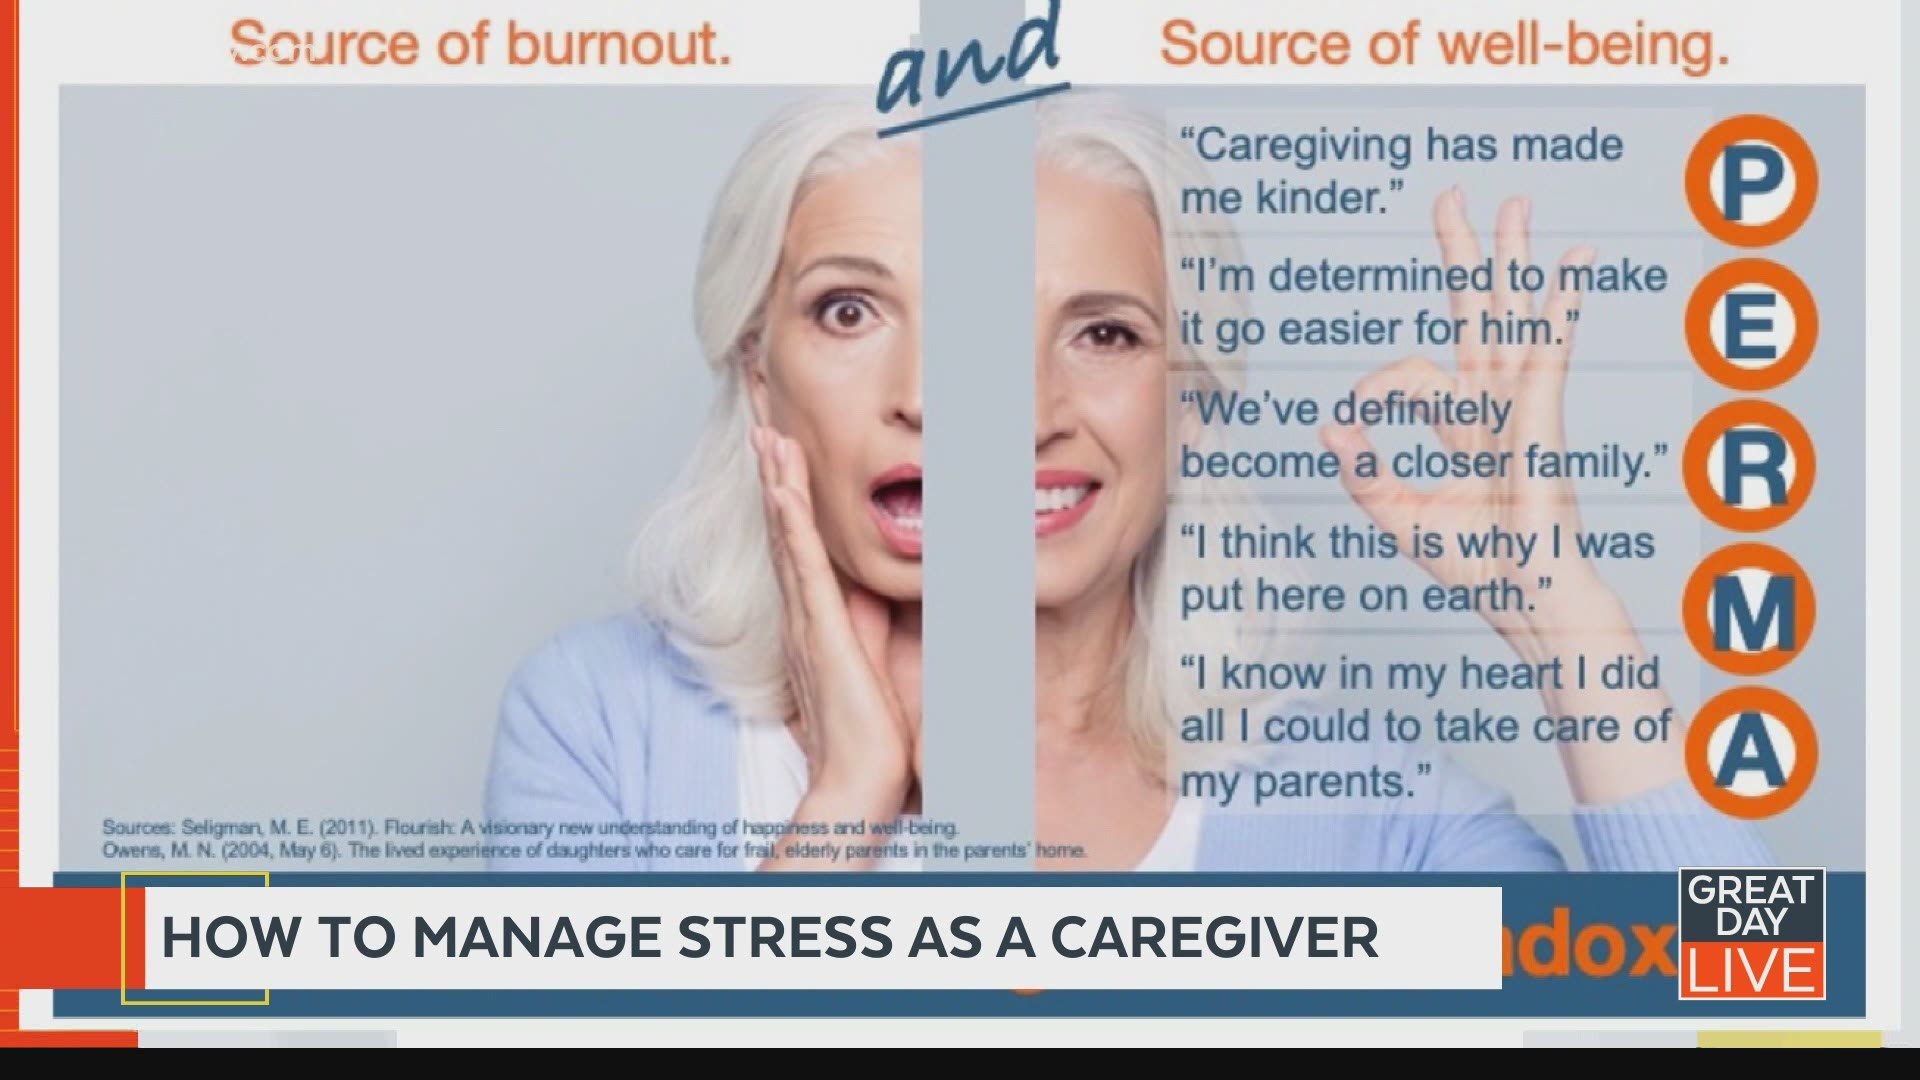 How to manage stress as a caregiver